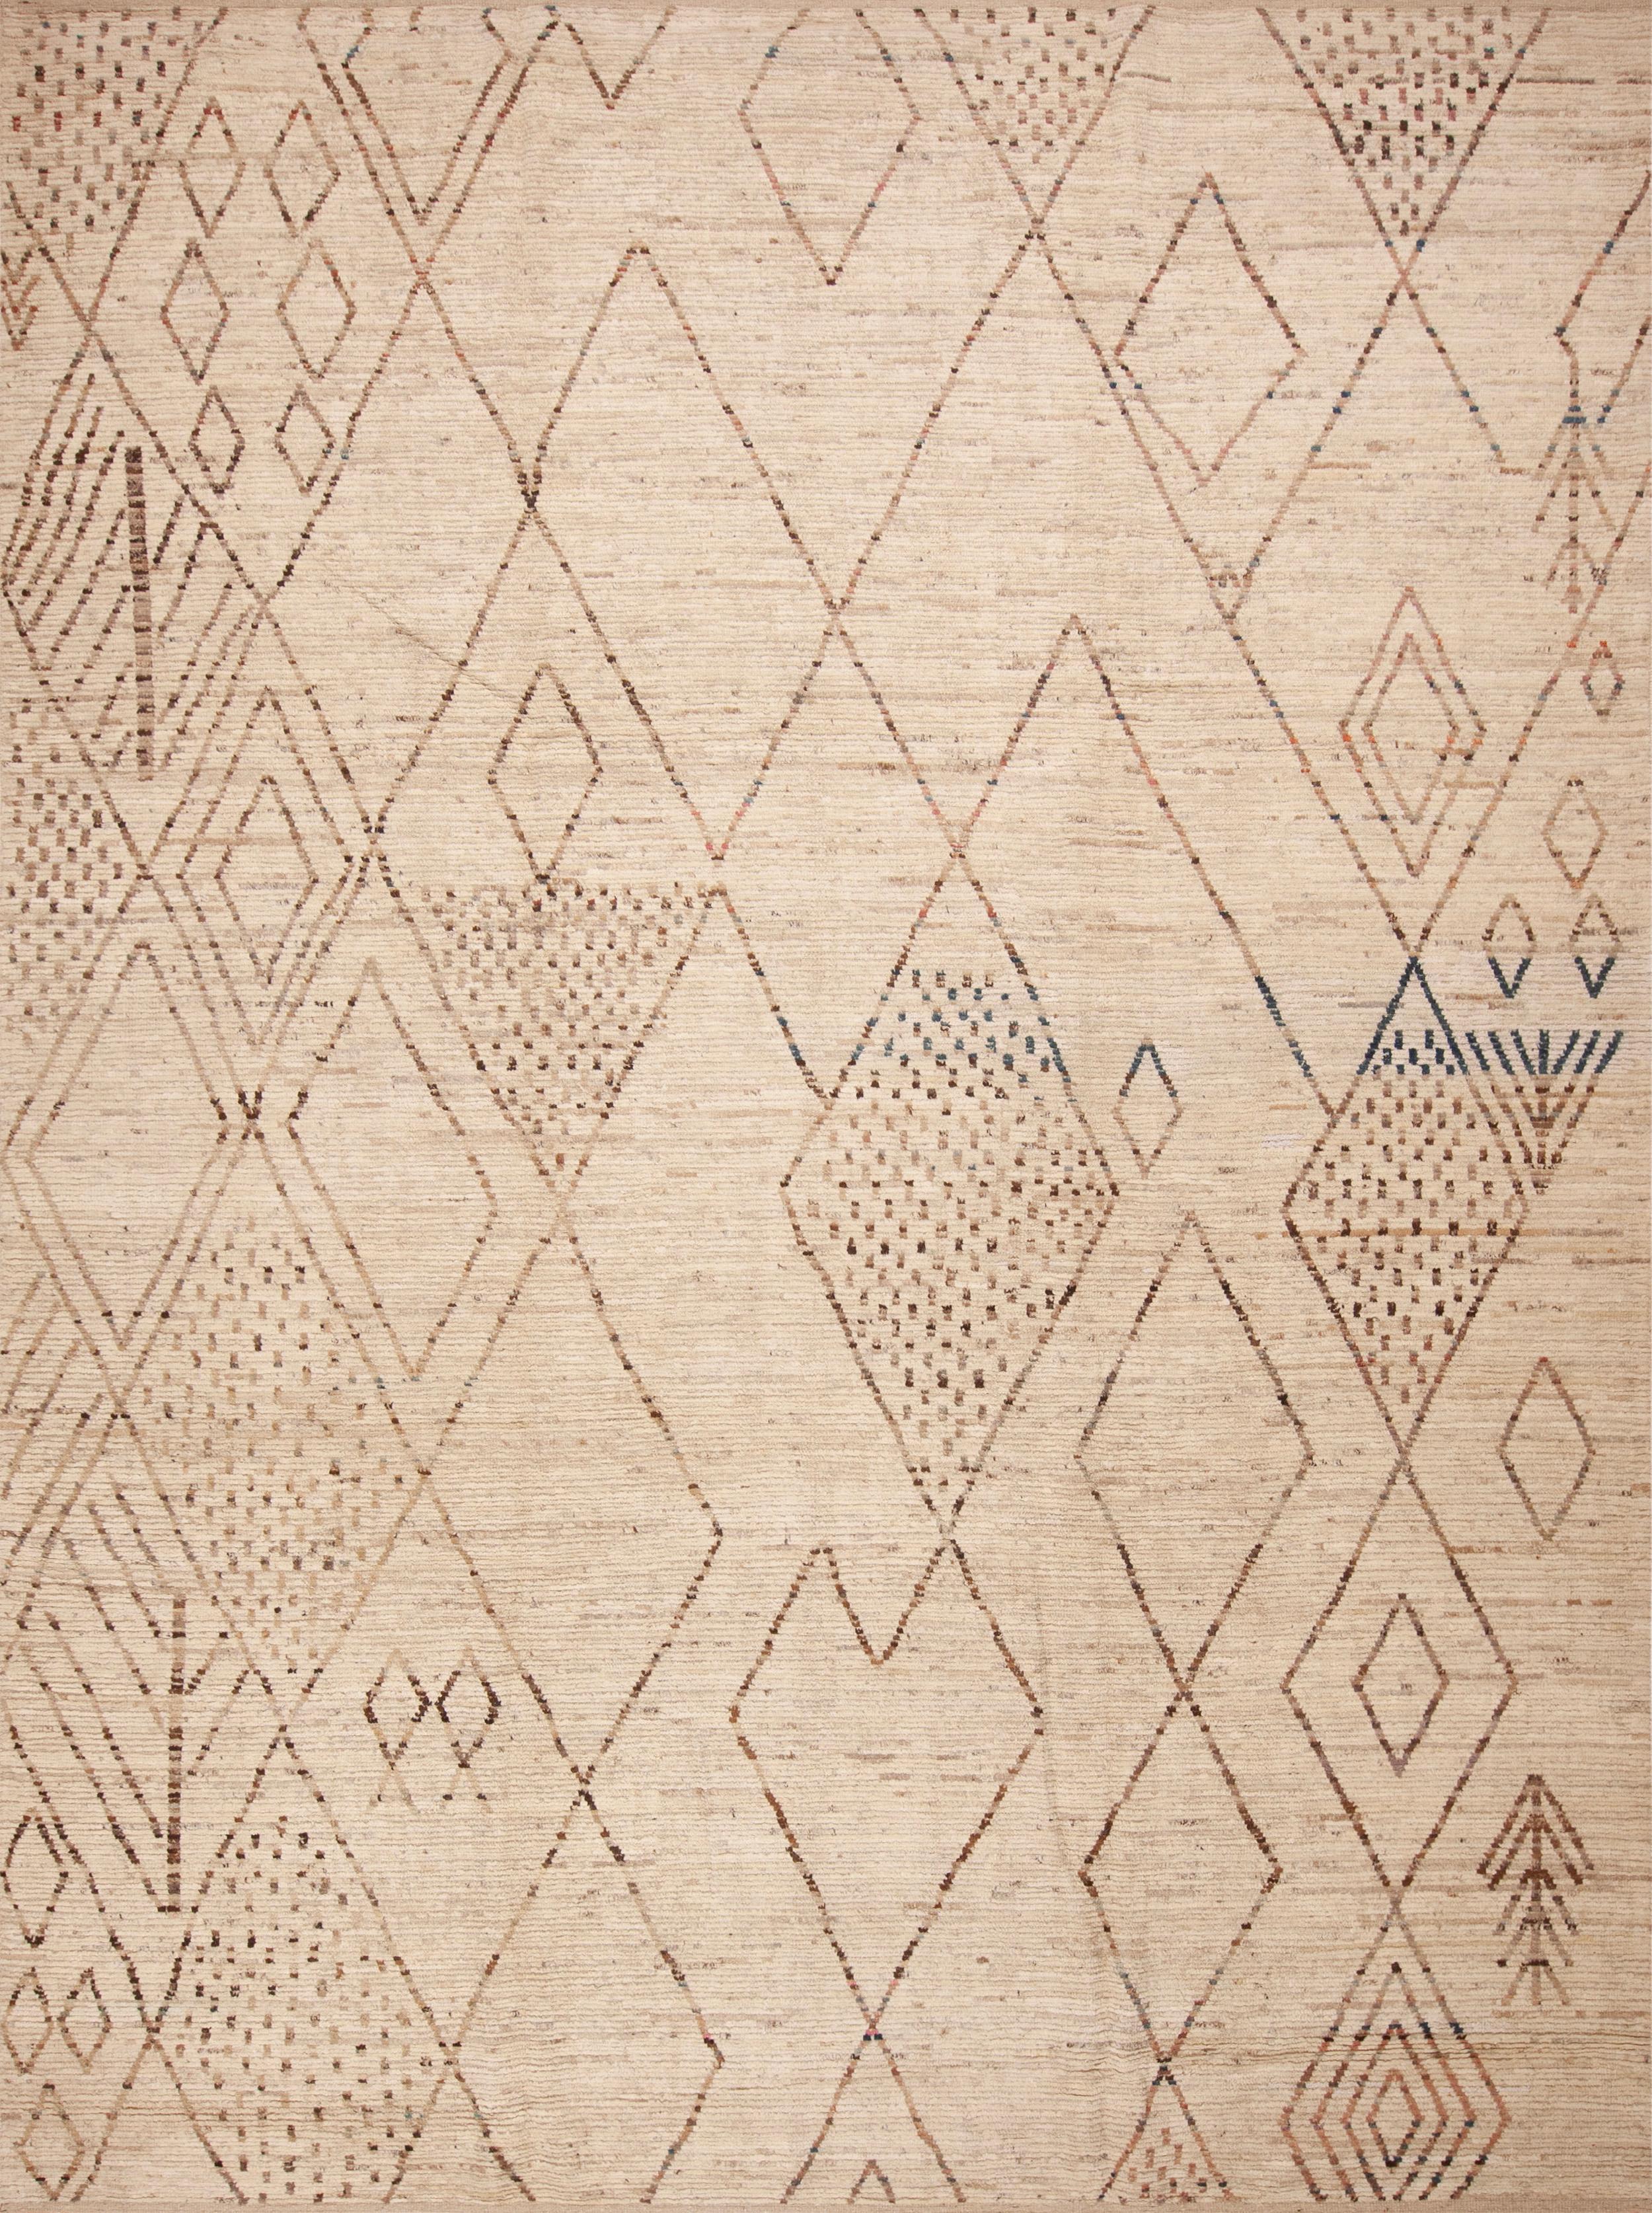 Nazmiyal Collection Tribal Beni Ourain Design Pattern Modern Rug 10'4